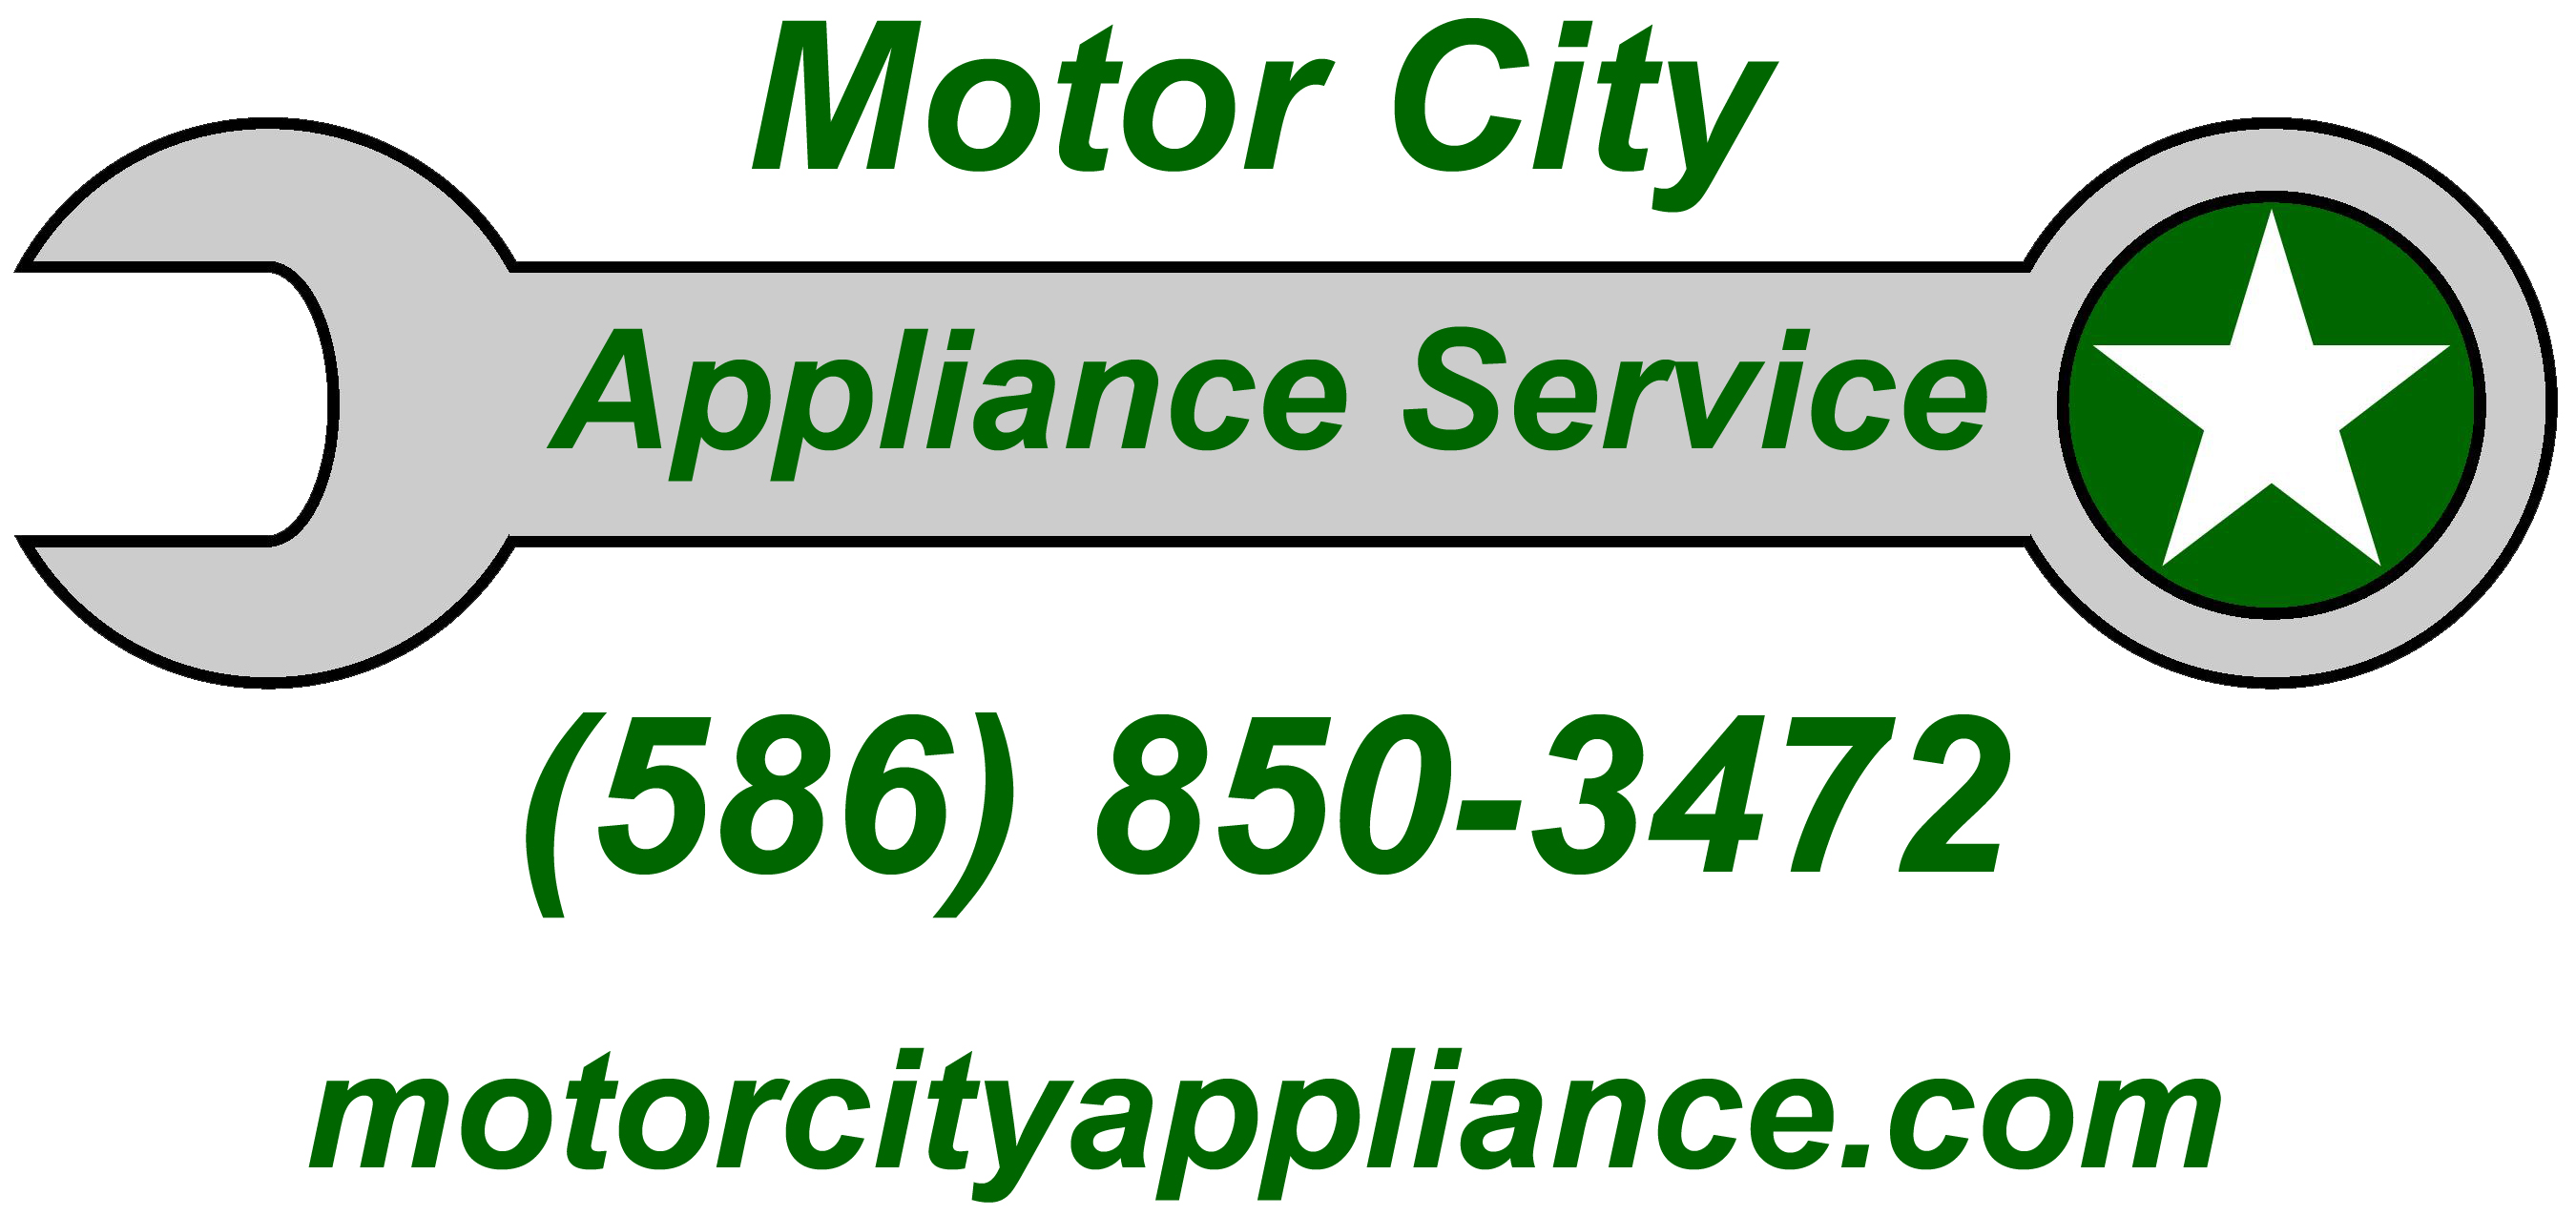 Motor City Appliance Service